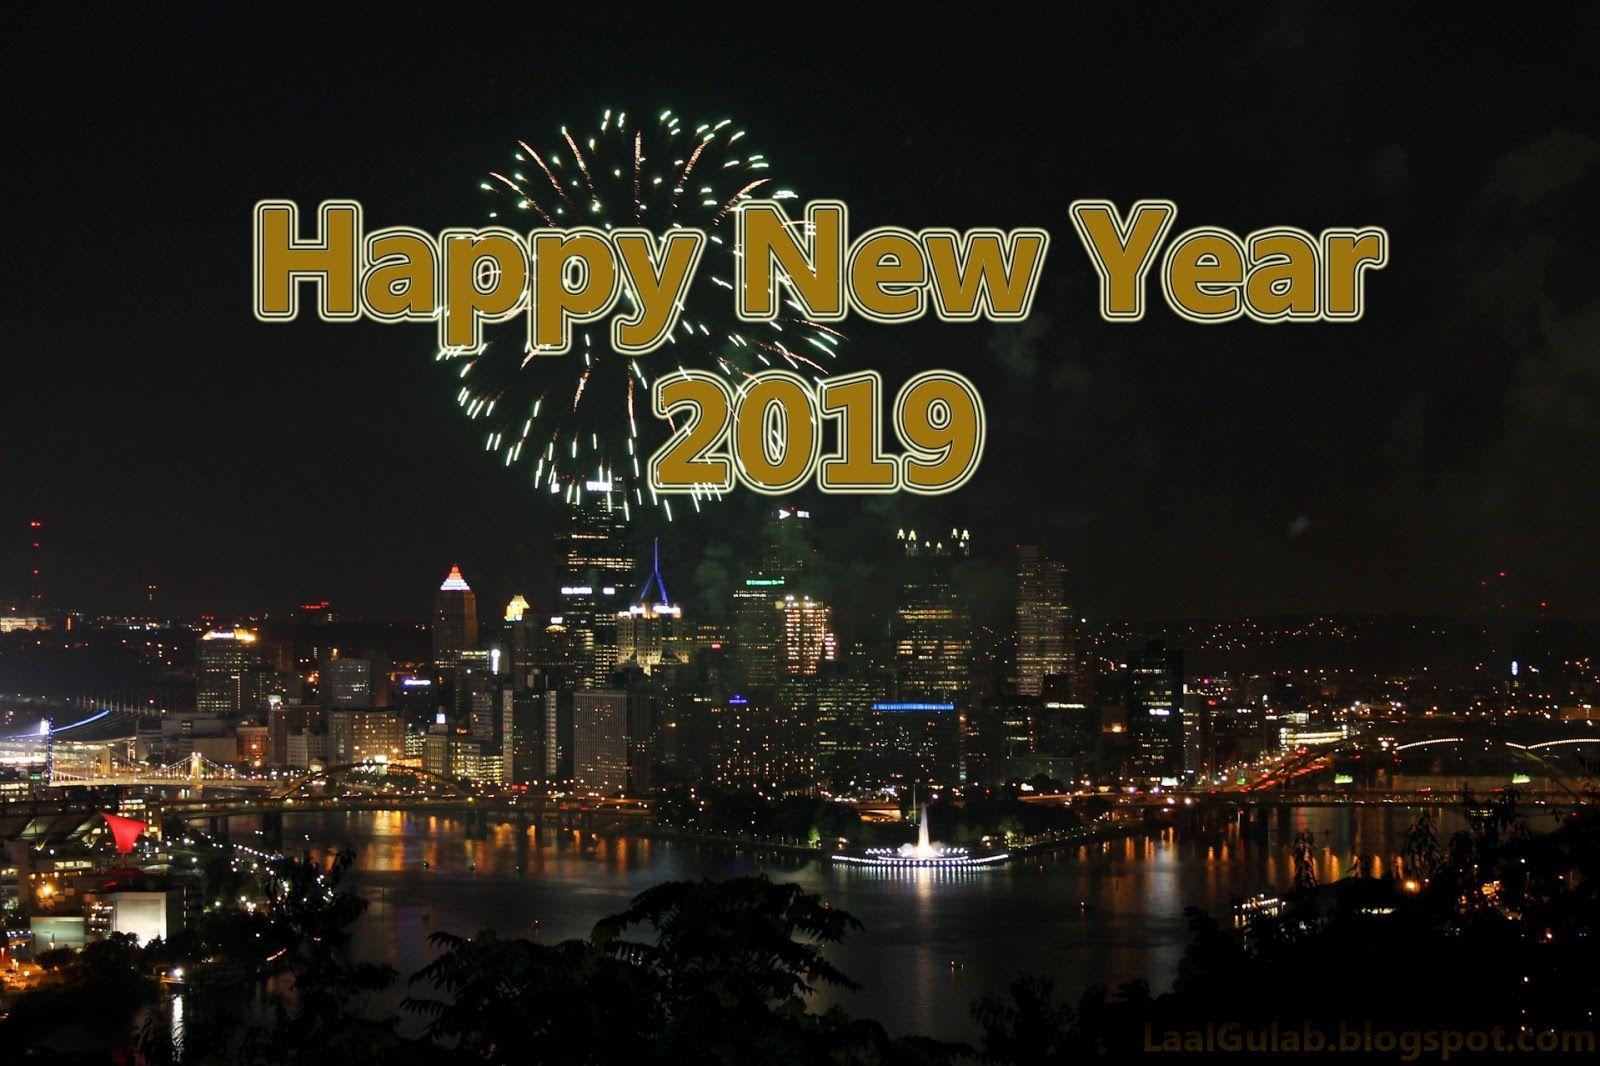 Happy New Year 2019 Wallpaper HD Image 2019 Happy New Year 2019